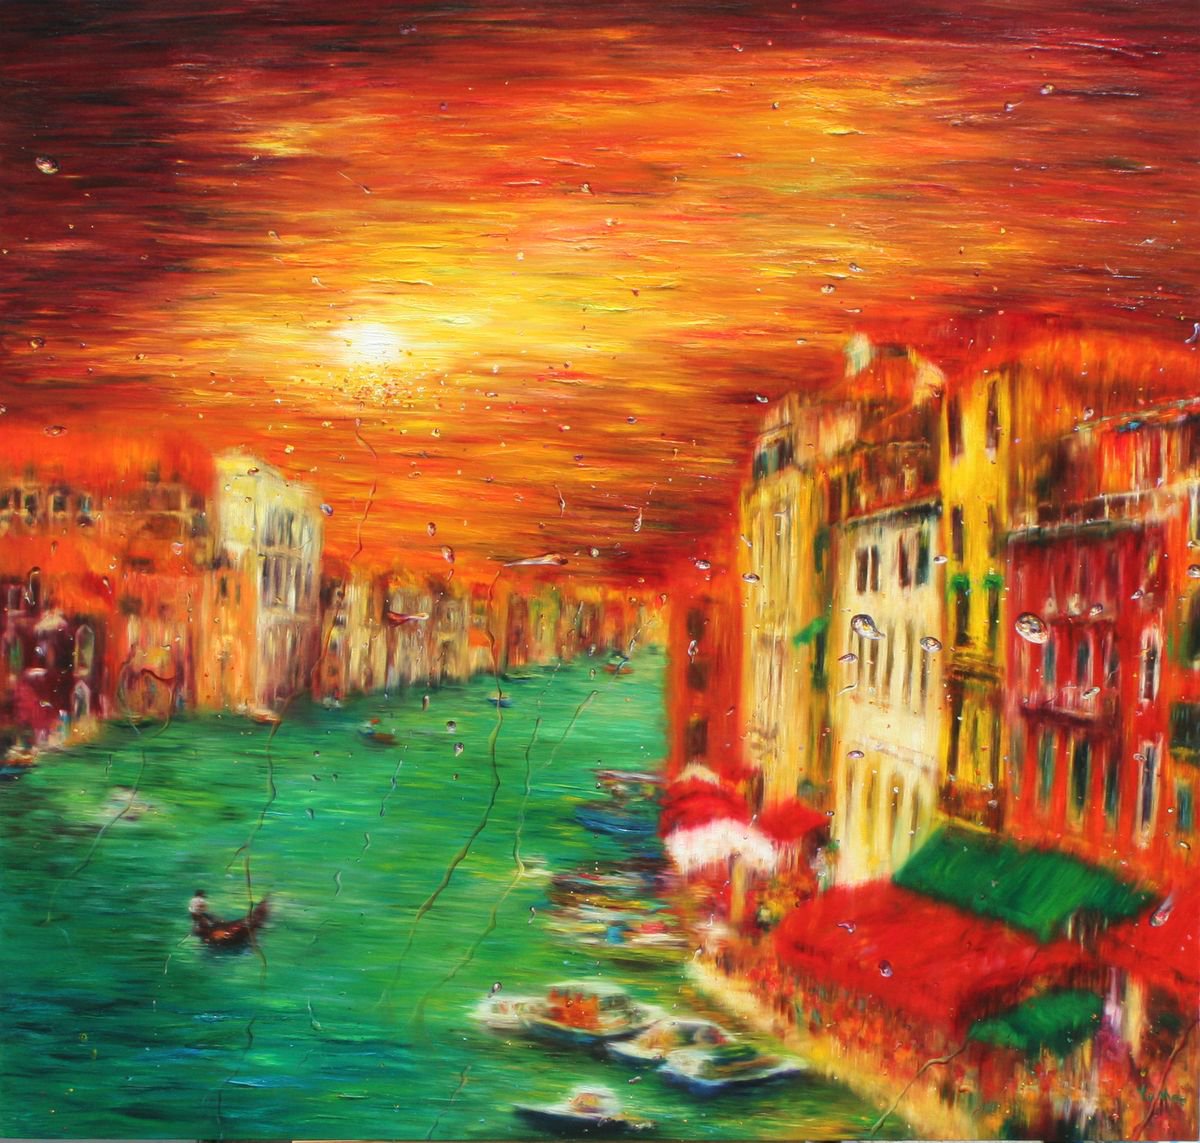 Dream of Being Water in Venice 1 by Yumee Bae